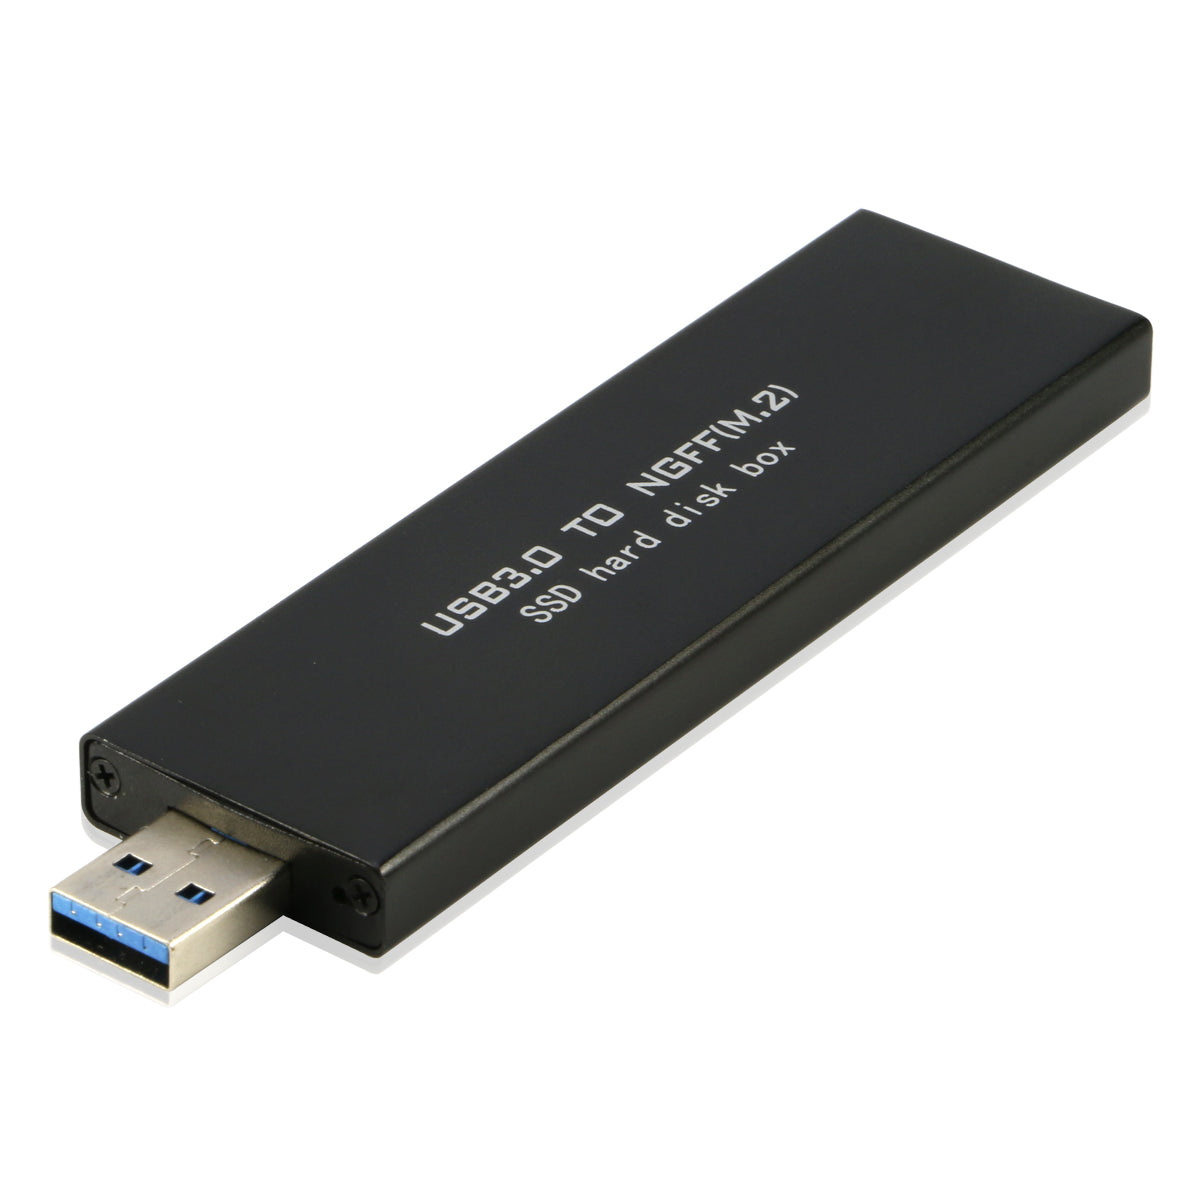 RIITOP M.2 Enclosure USB 3.0, External M.2 SSD (SATA